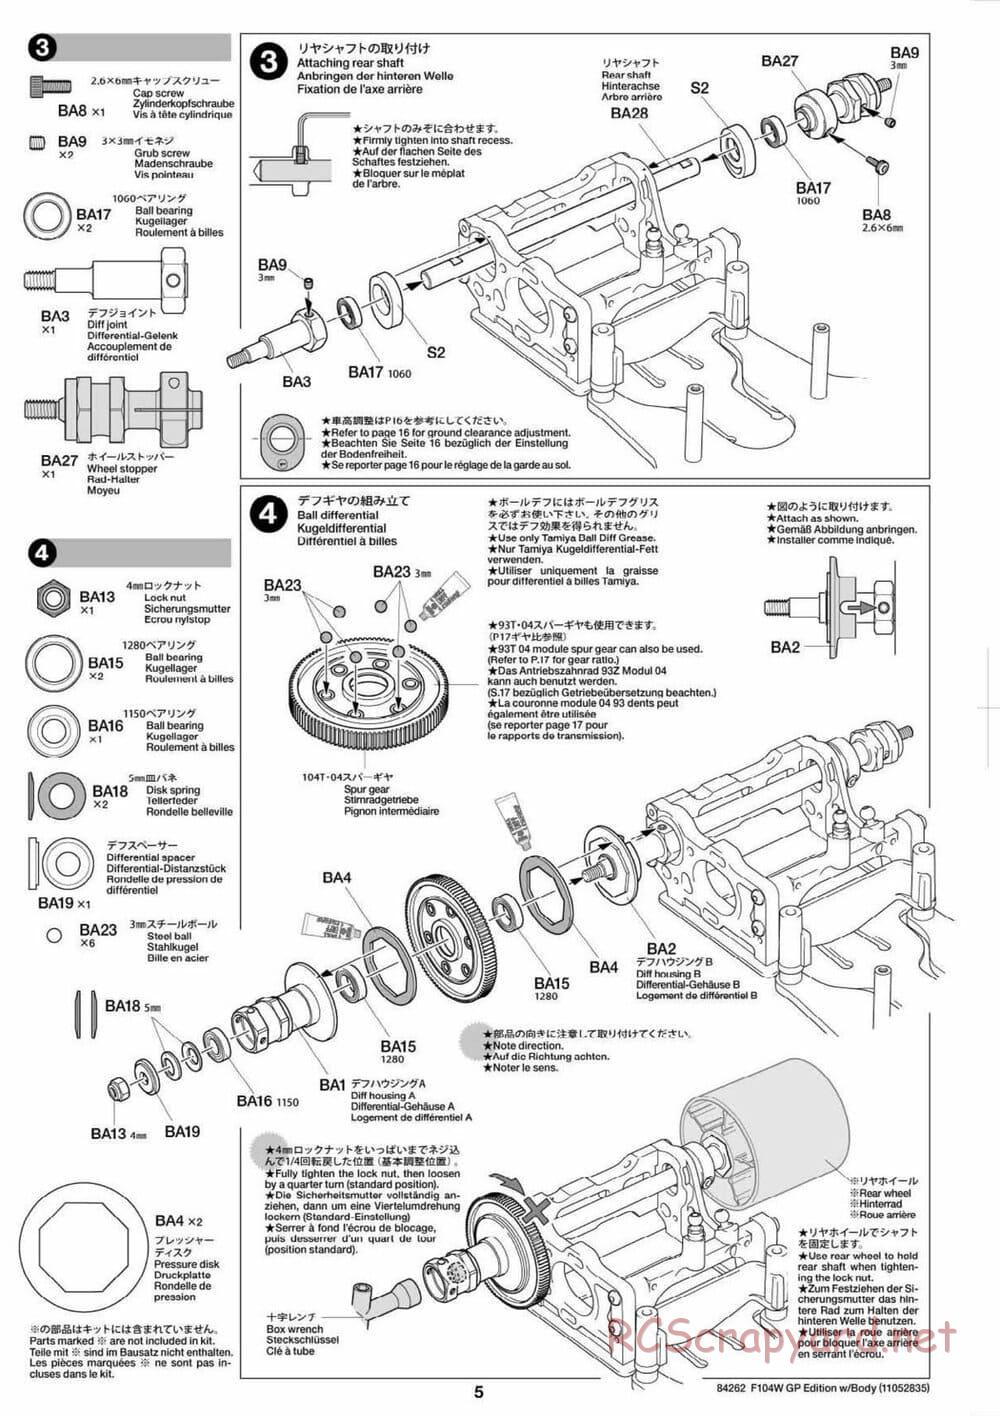 Tamiya - F104W GP Chassis - Manual - Page 5